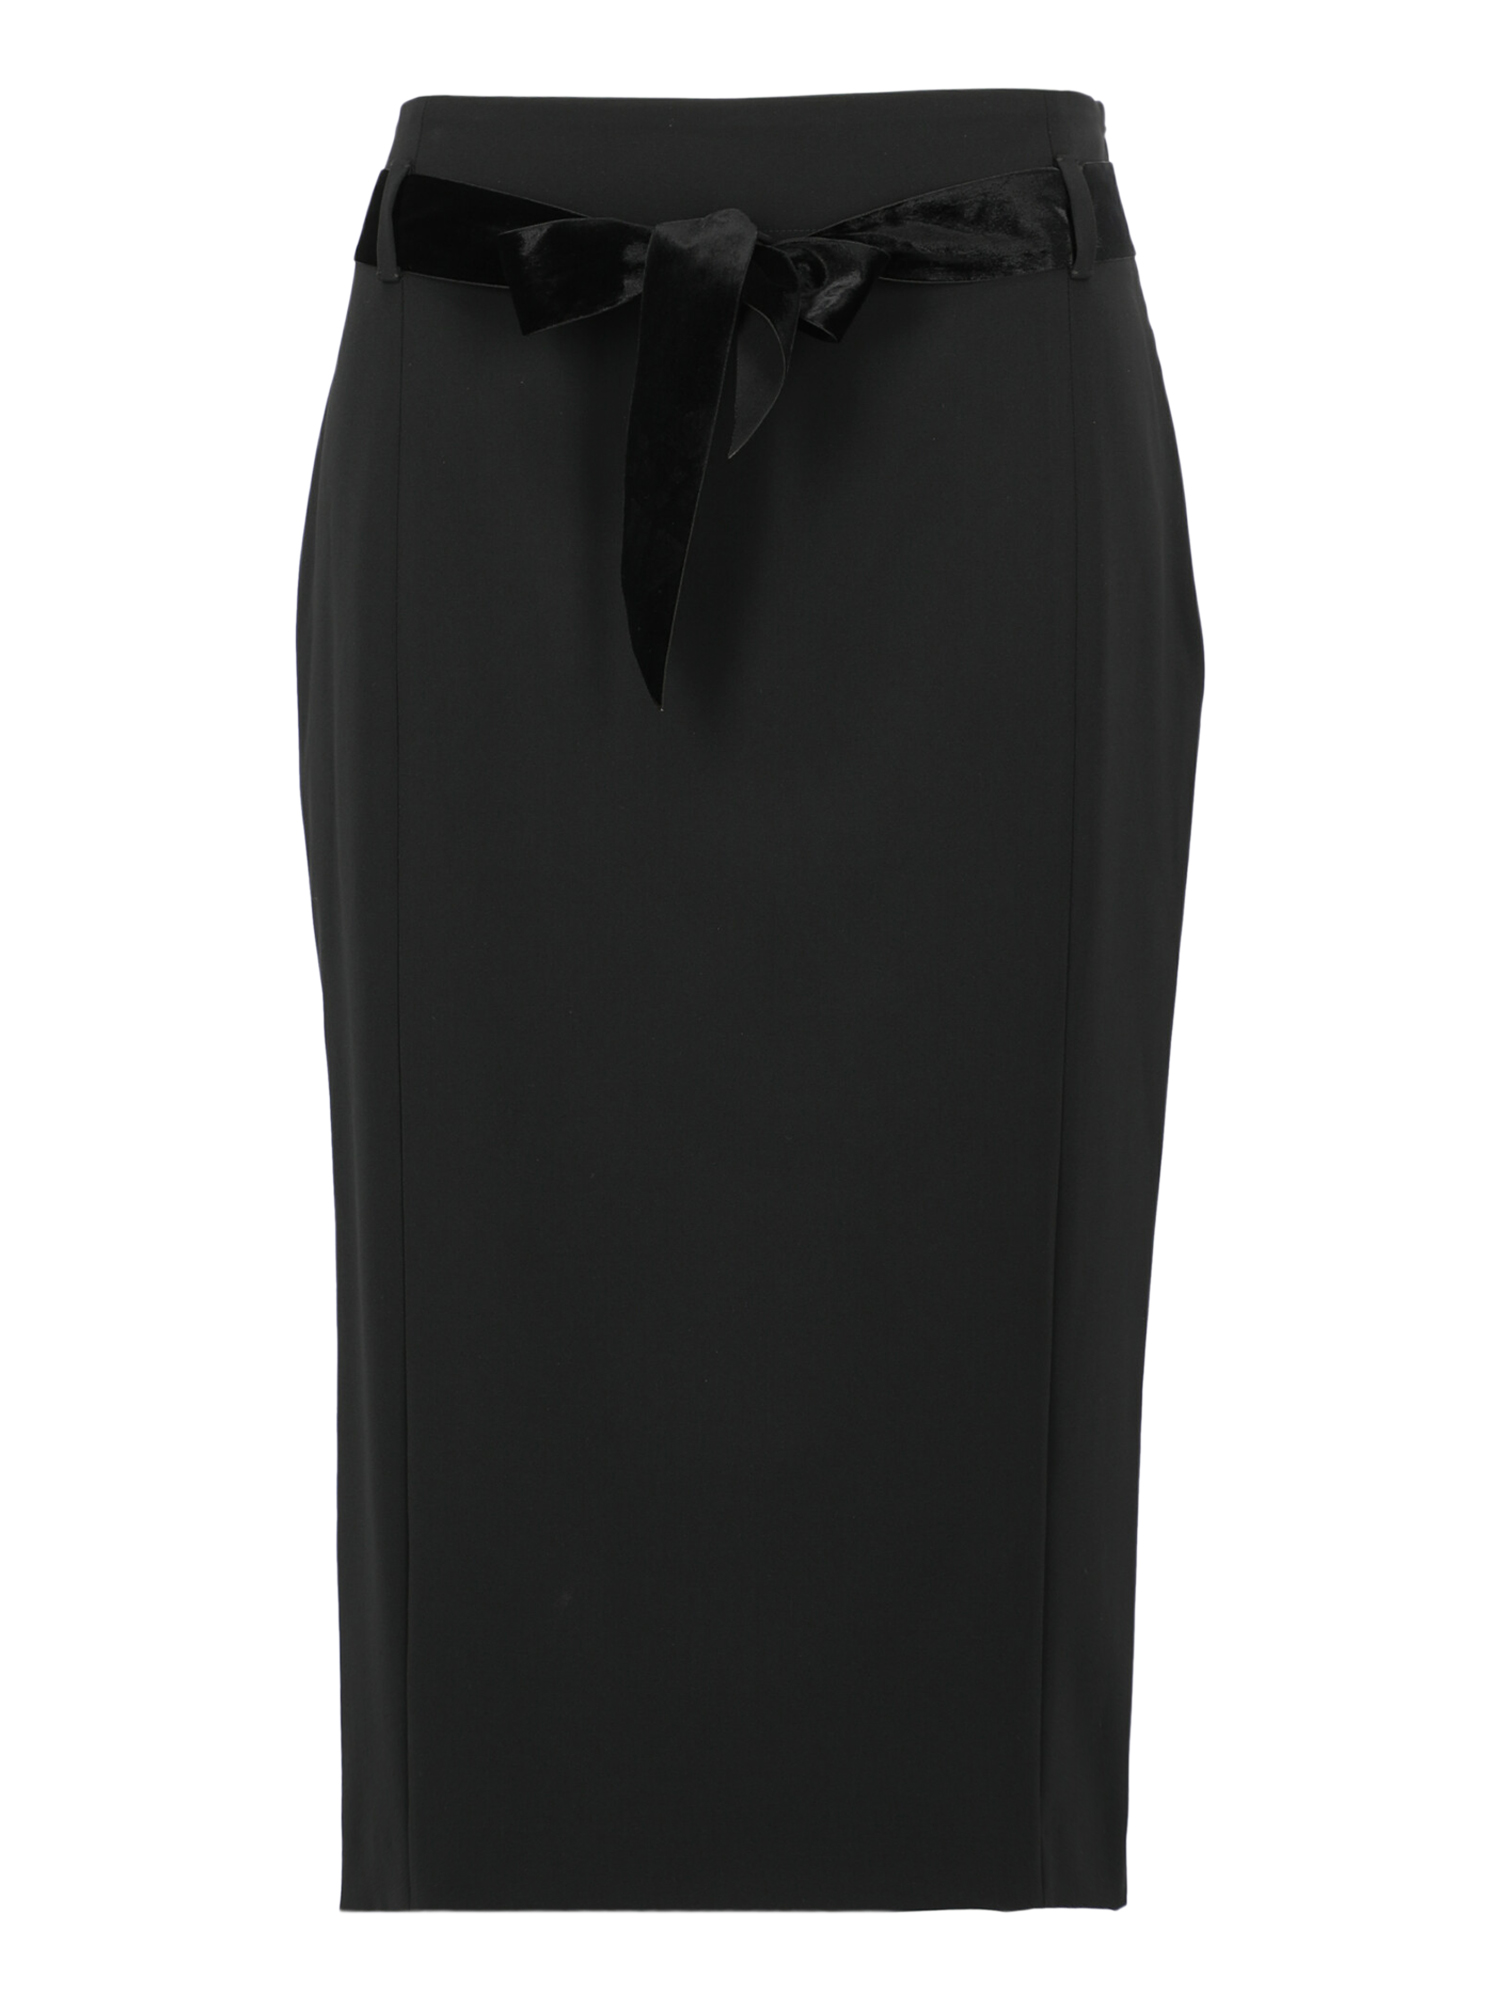 Tom Ford Special Price Women Skirts Black IT 46 | eBay